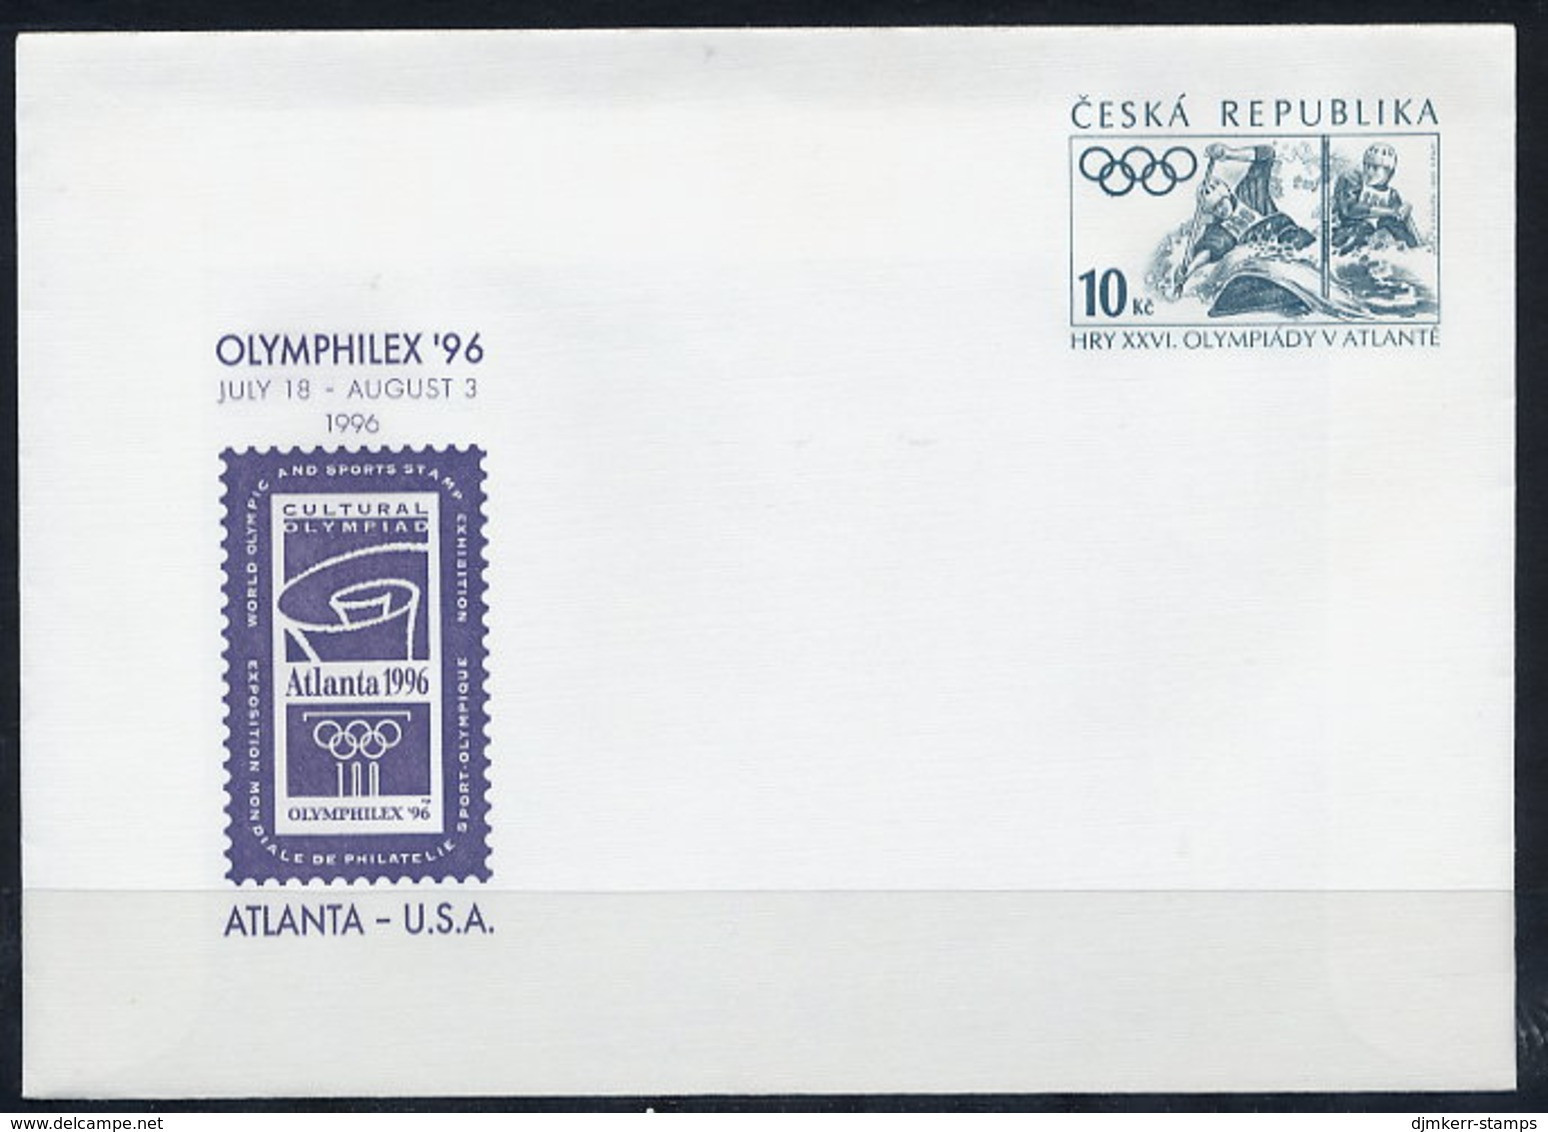 CZECH REPUBLIC 1996 10 Kc Envelope OLYMPHILEX '96 Unused.  Michel U3 - Enveloppes